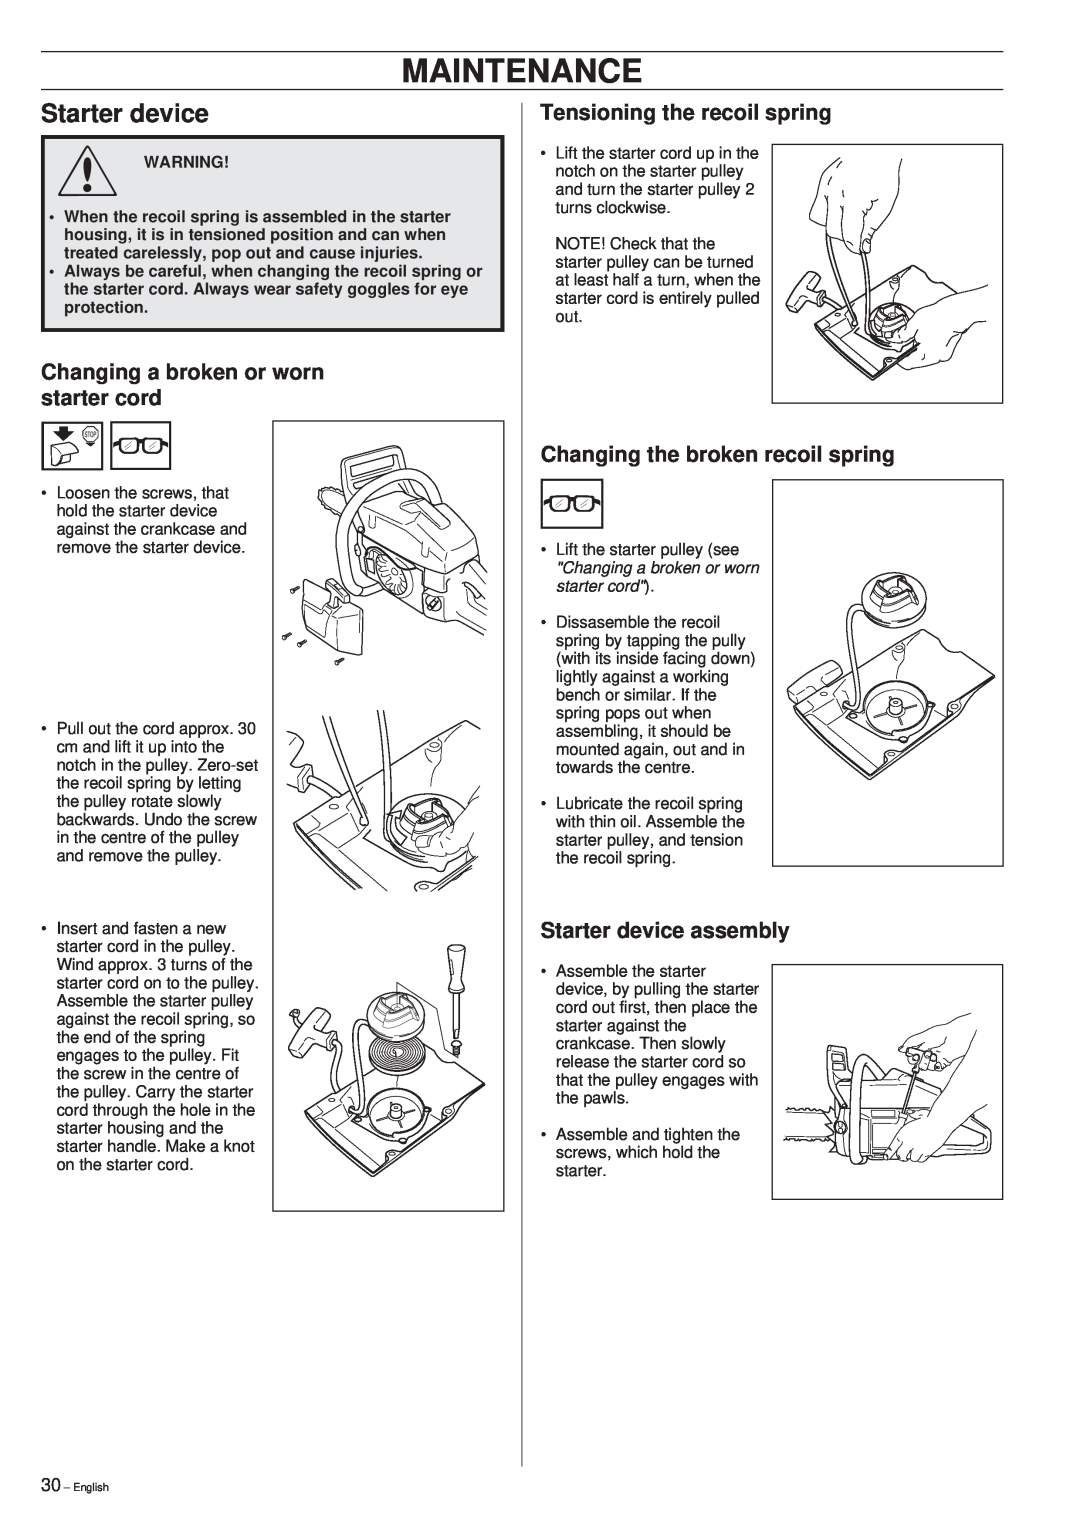 Husqvarna 345 manual Starter device, Changing a broken or worn starter cord, Tensioning the recoil spring, Maintenance 